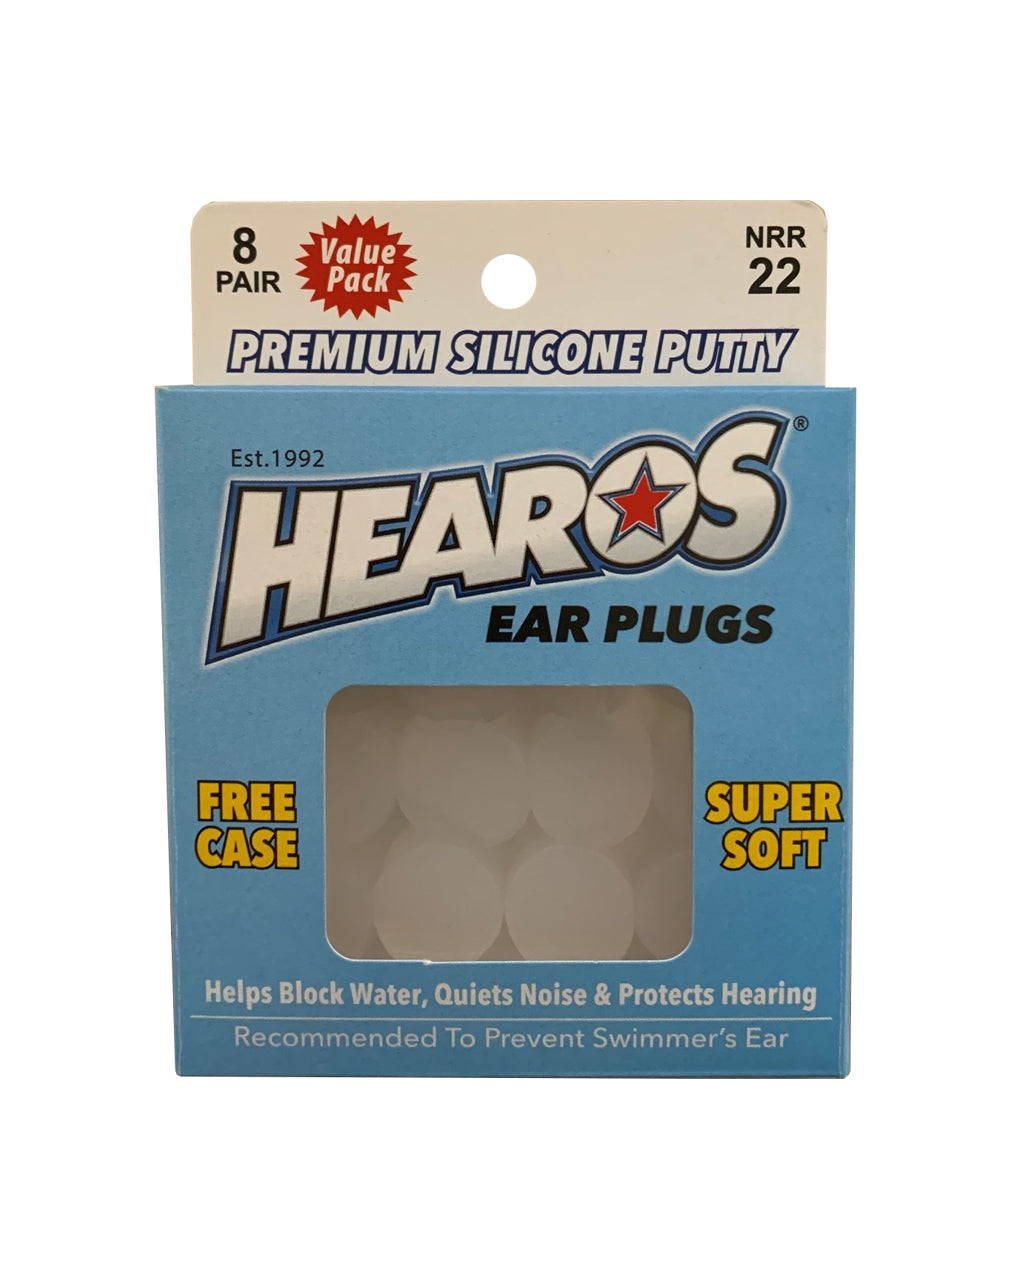 HEAROS MULTI-USE SILICIONE EARPLUGS - 8 PAIRS